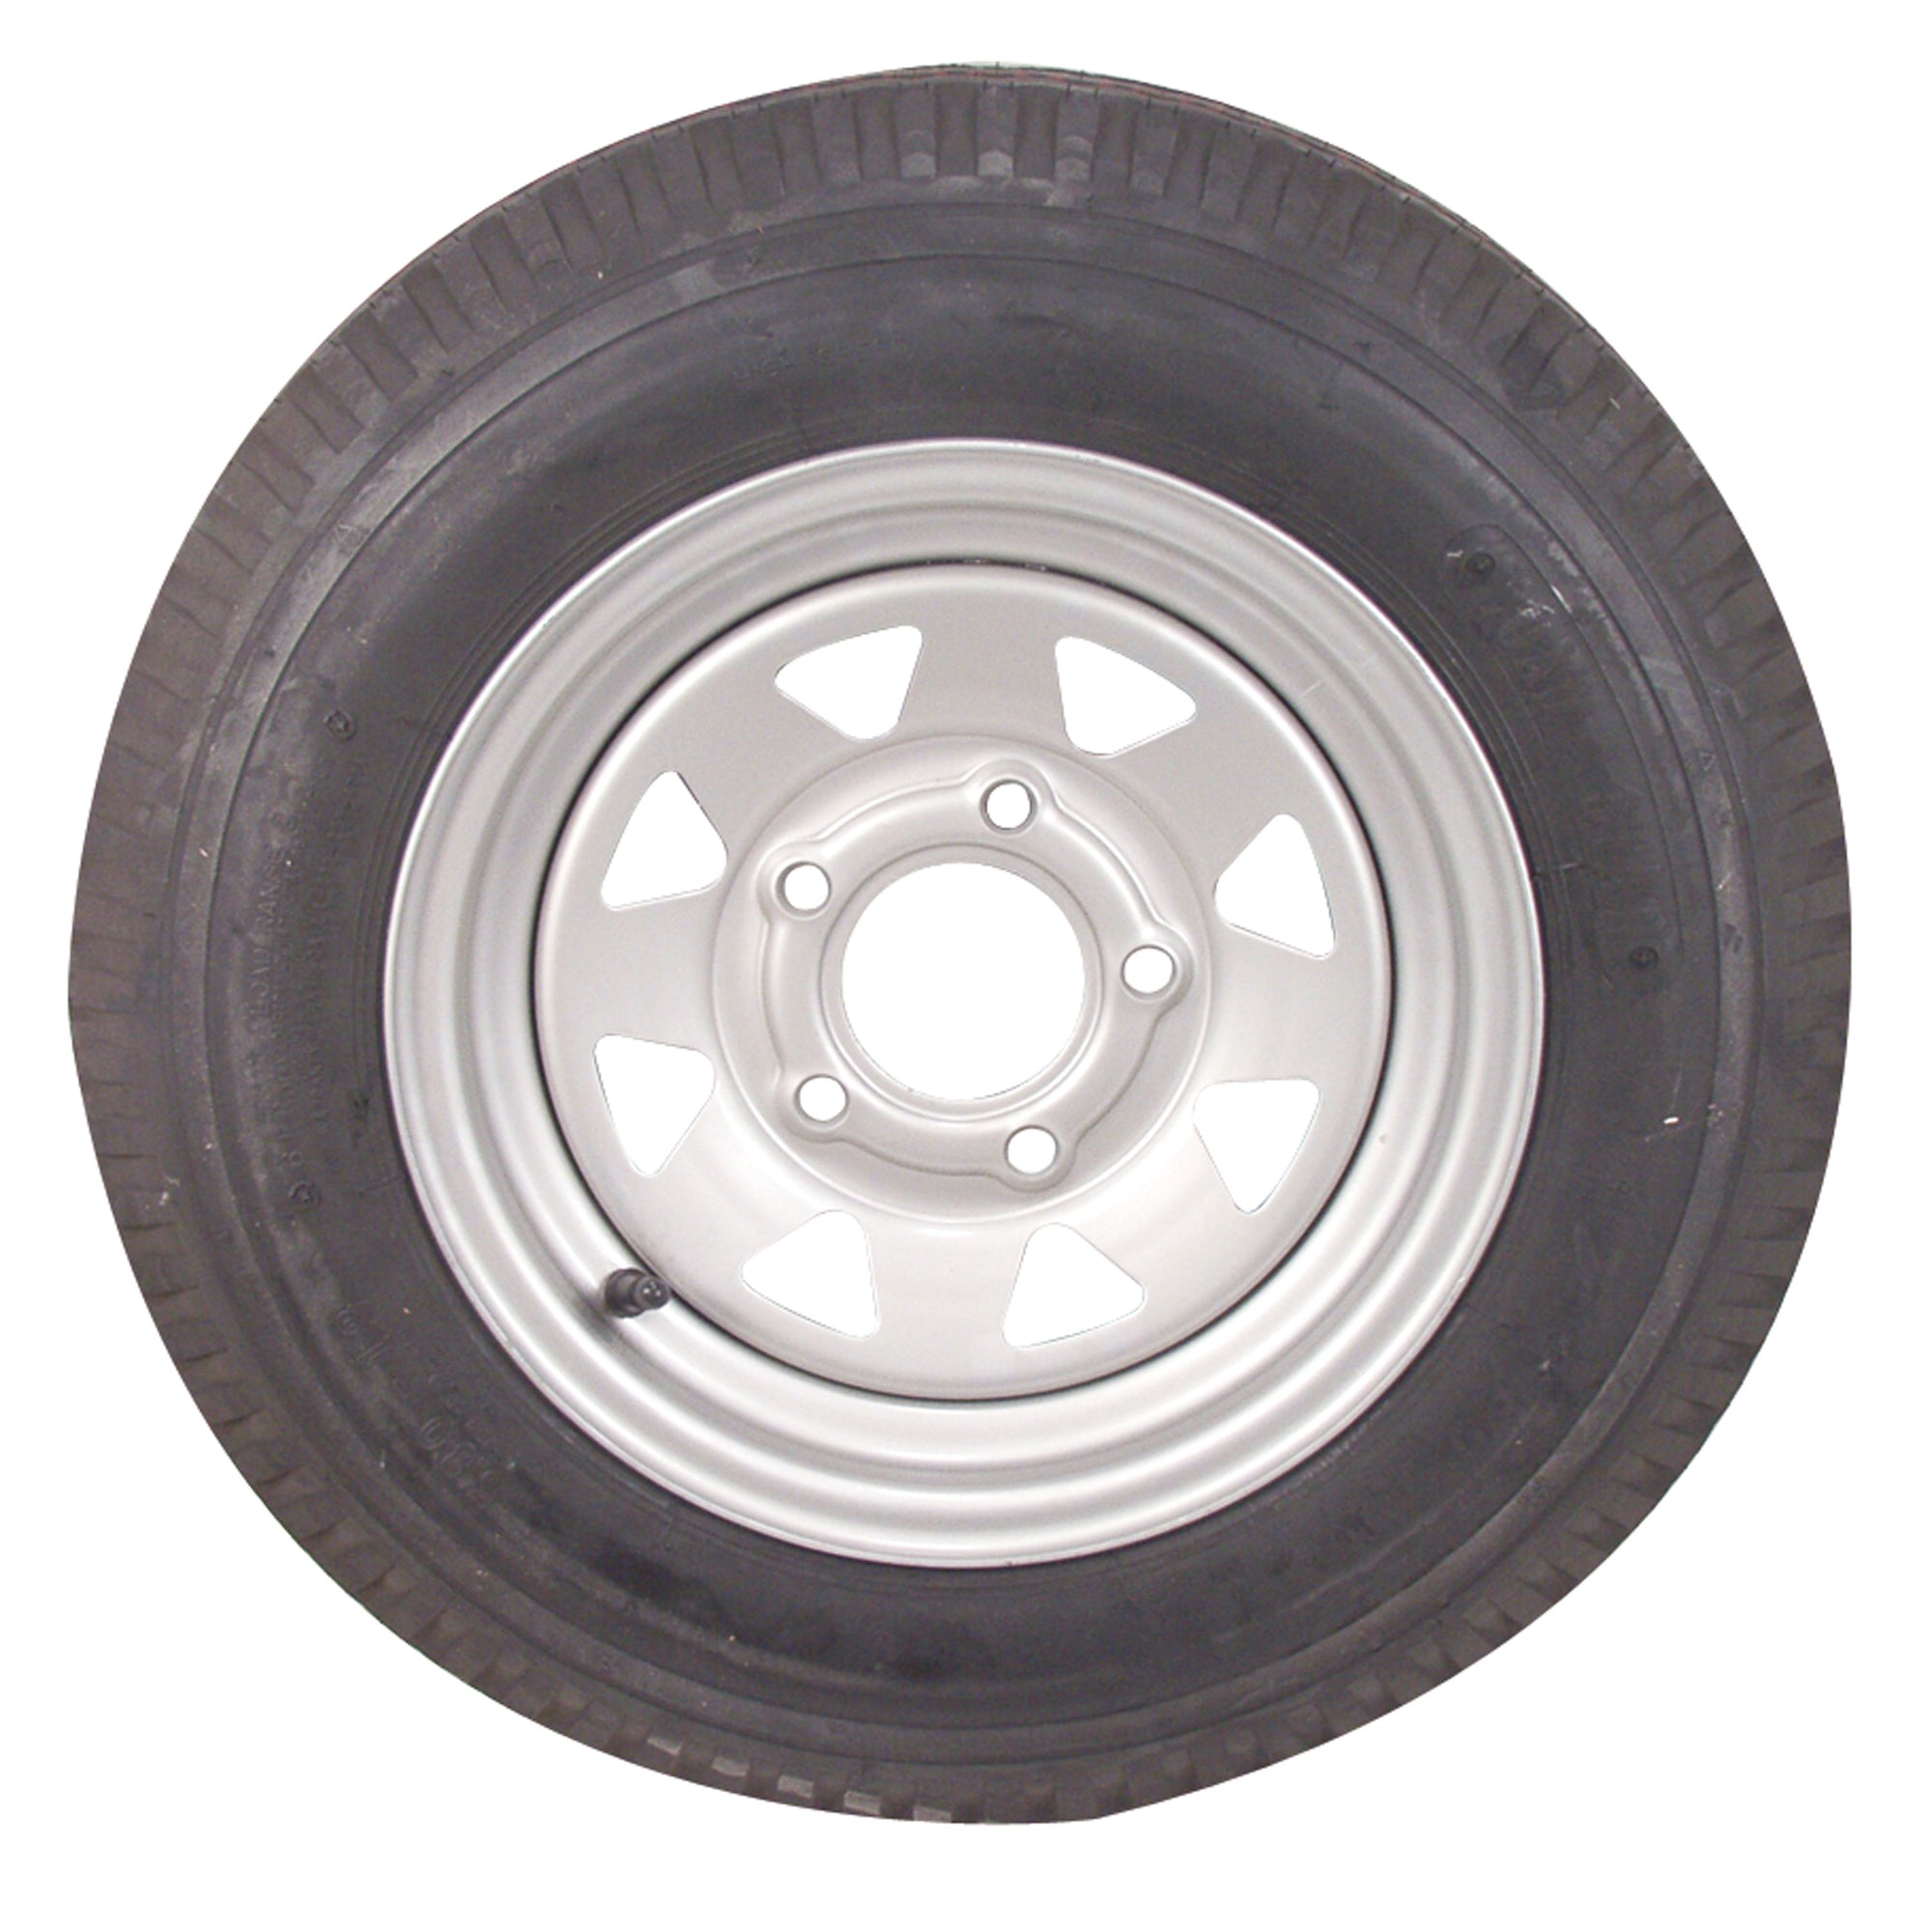 Americana Tire and Wheel 3S334 Economy Bias Tire and Wheel ST185/80D13 D/5-Hole - Galvanized Spoke Rim